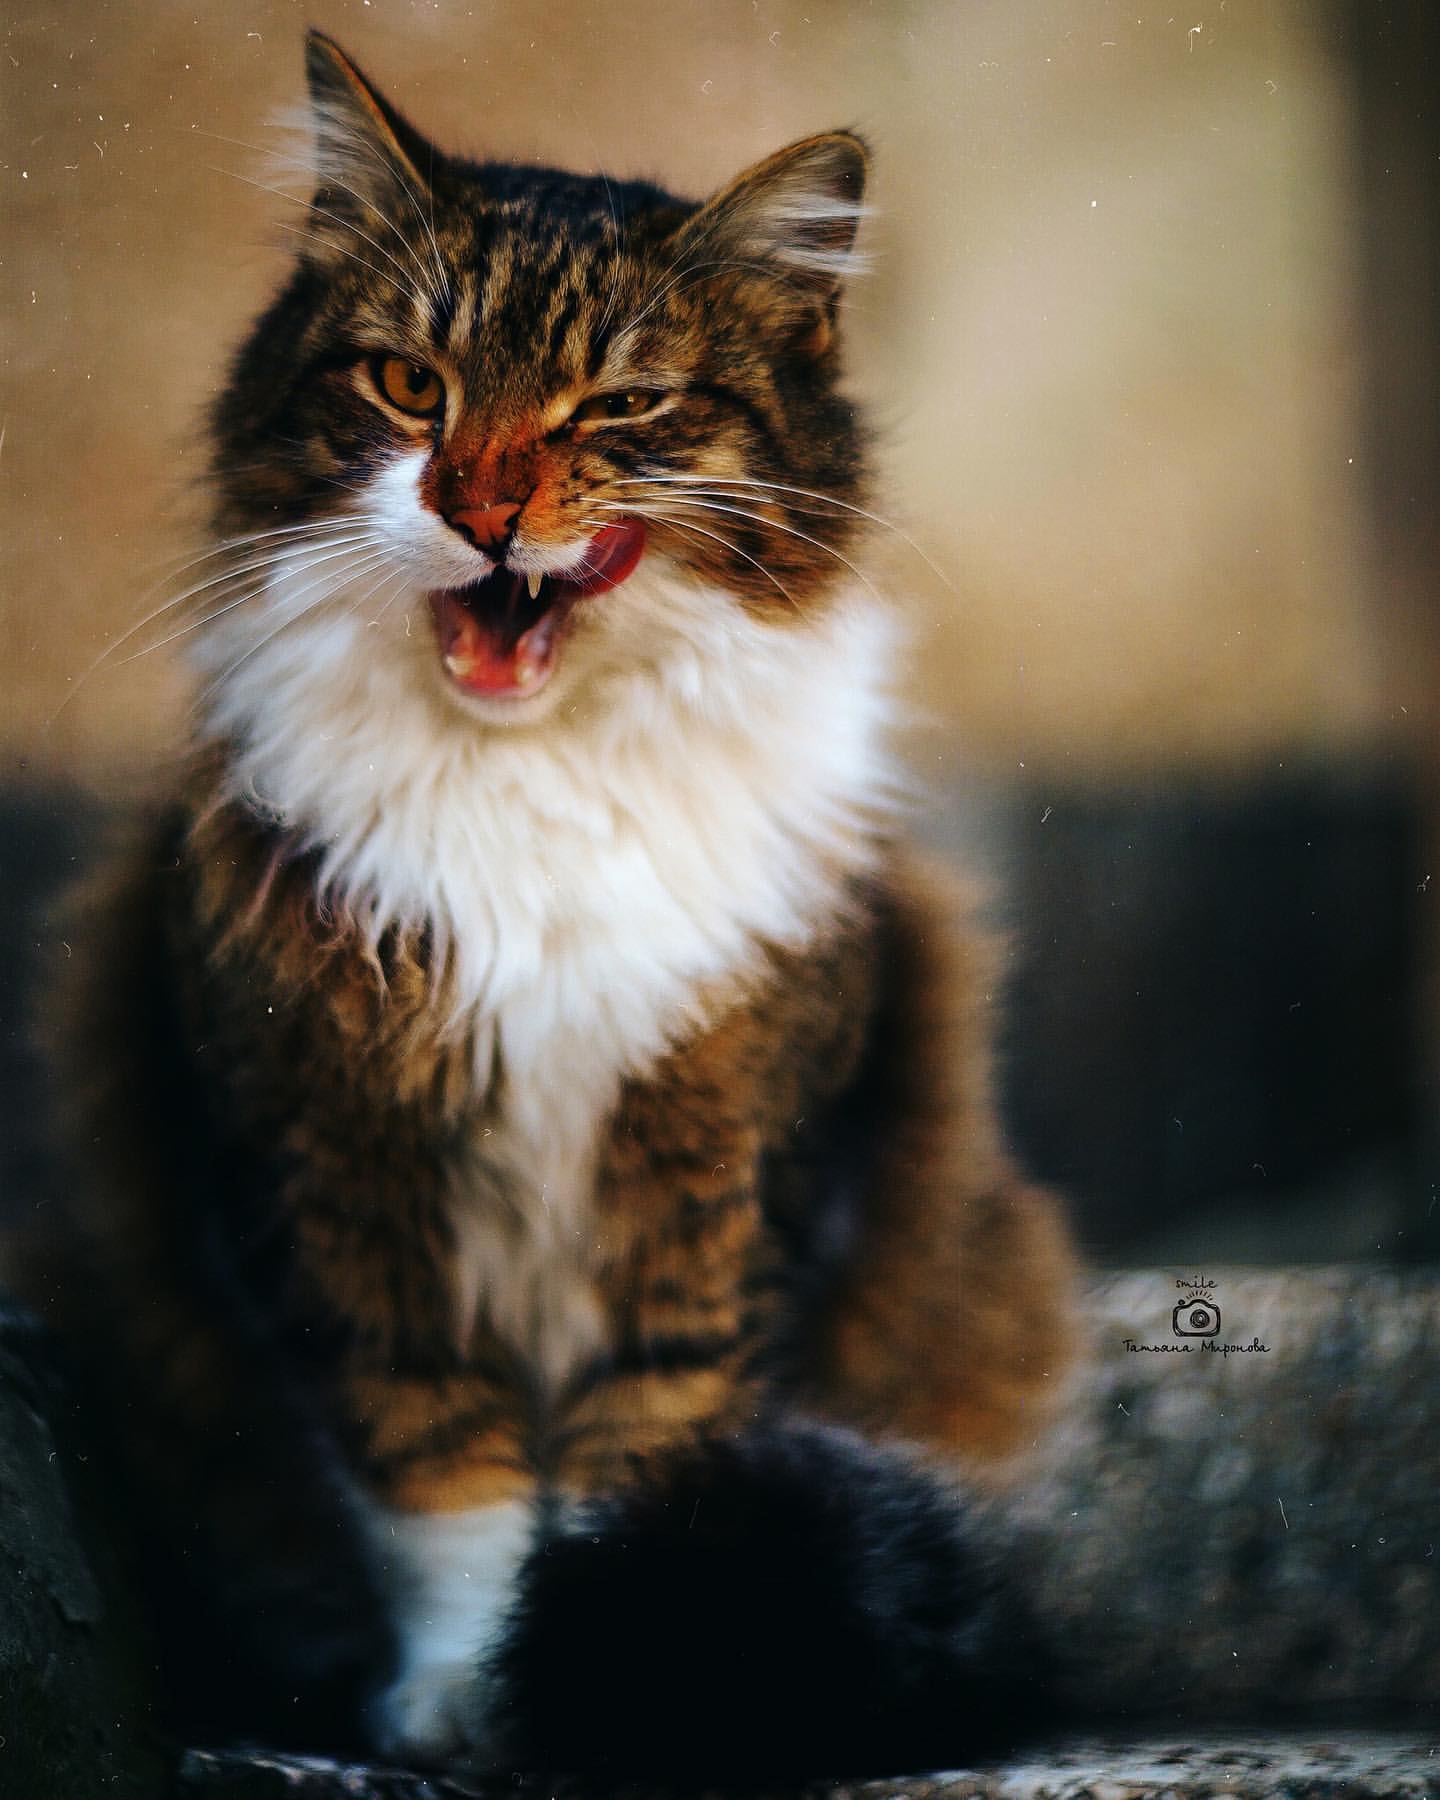 Фото Кошка с высунутым языком, by mironovatanyahoo